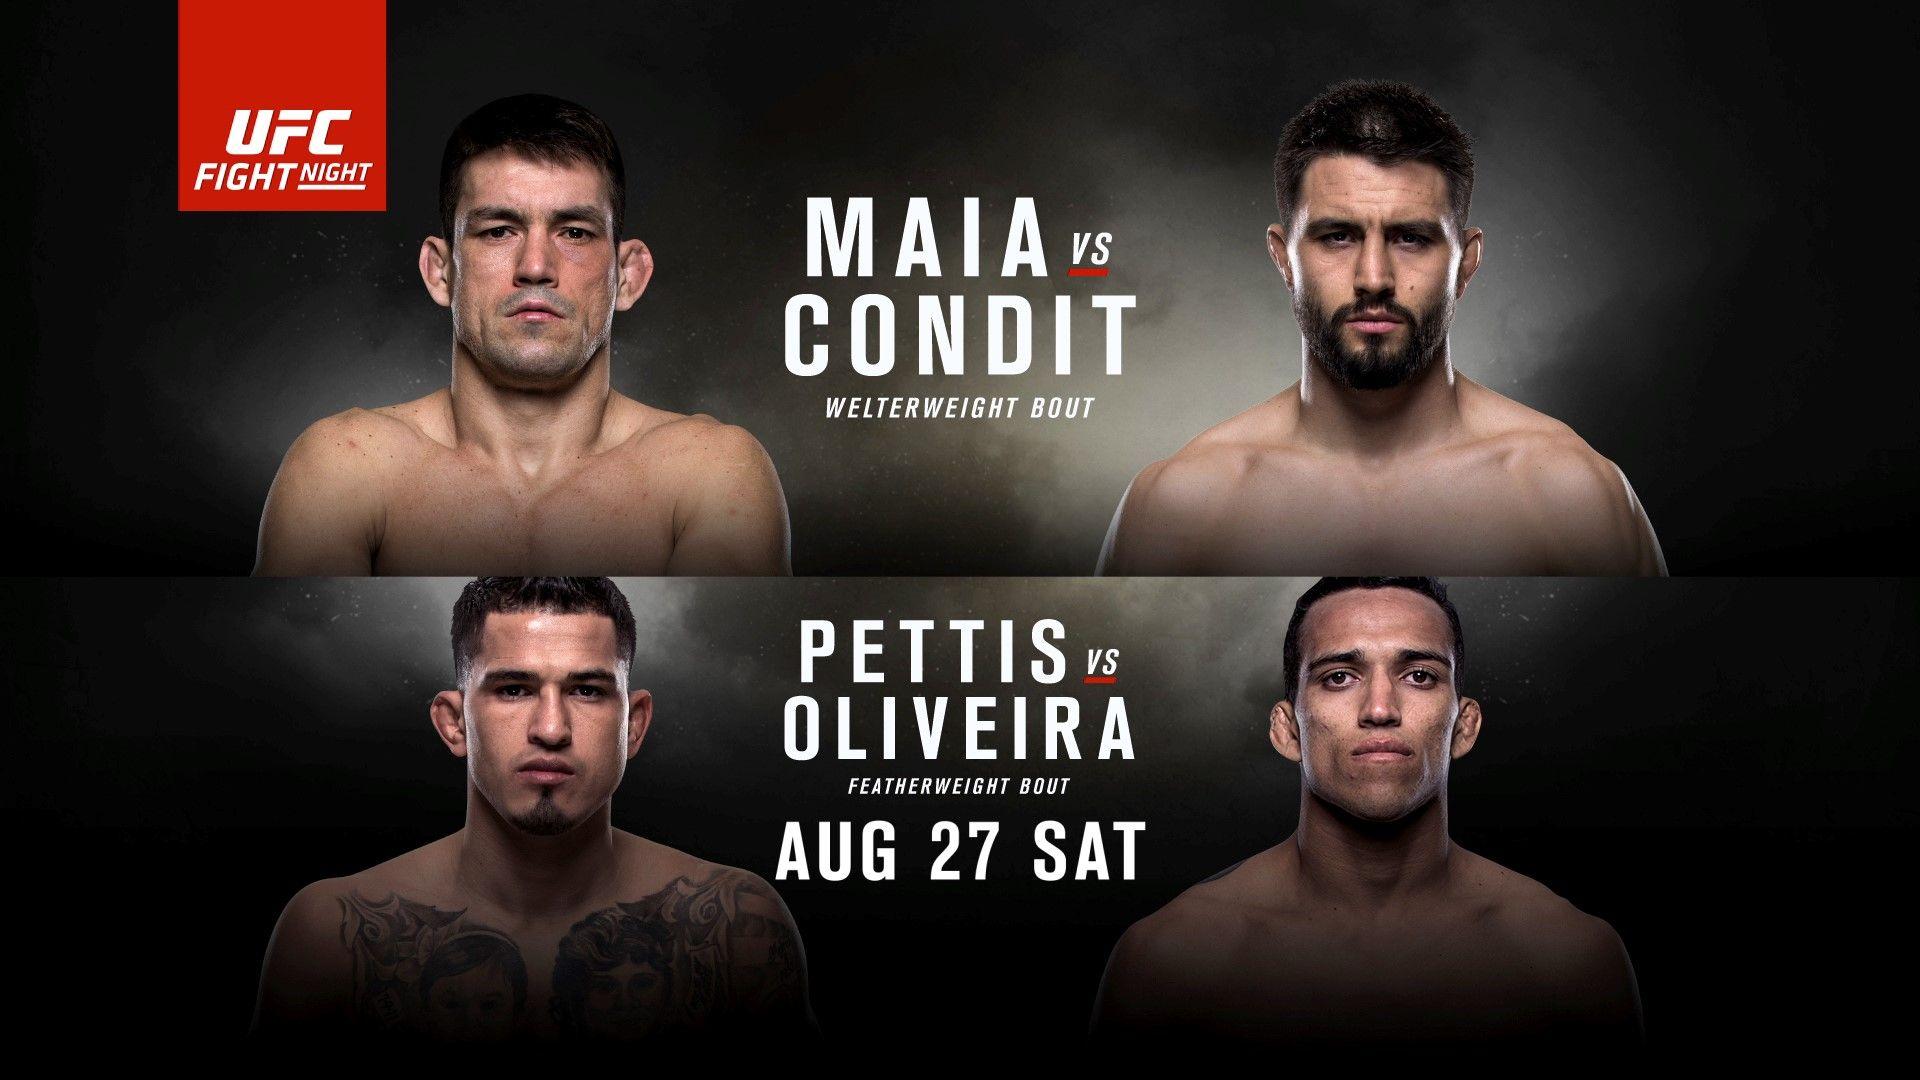 Fight Night: Maia vs Condit fantasy cheat sheet. UFC ®